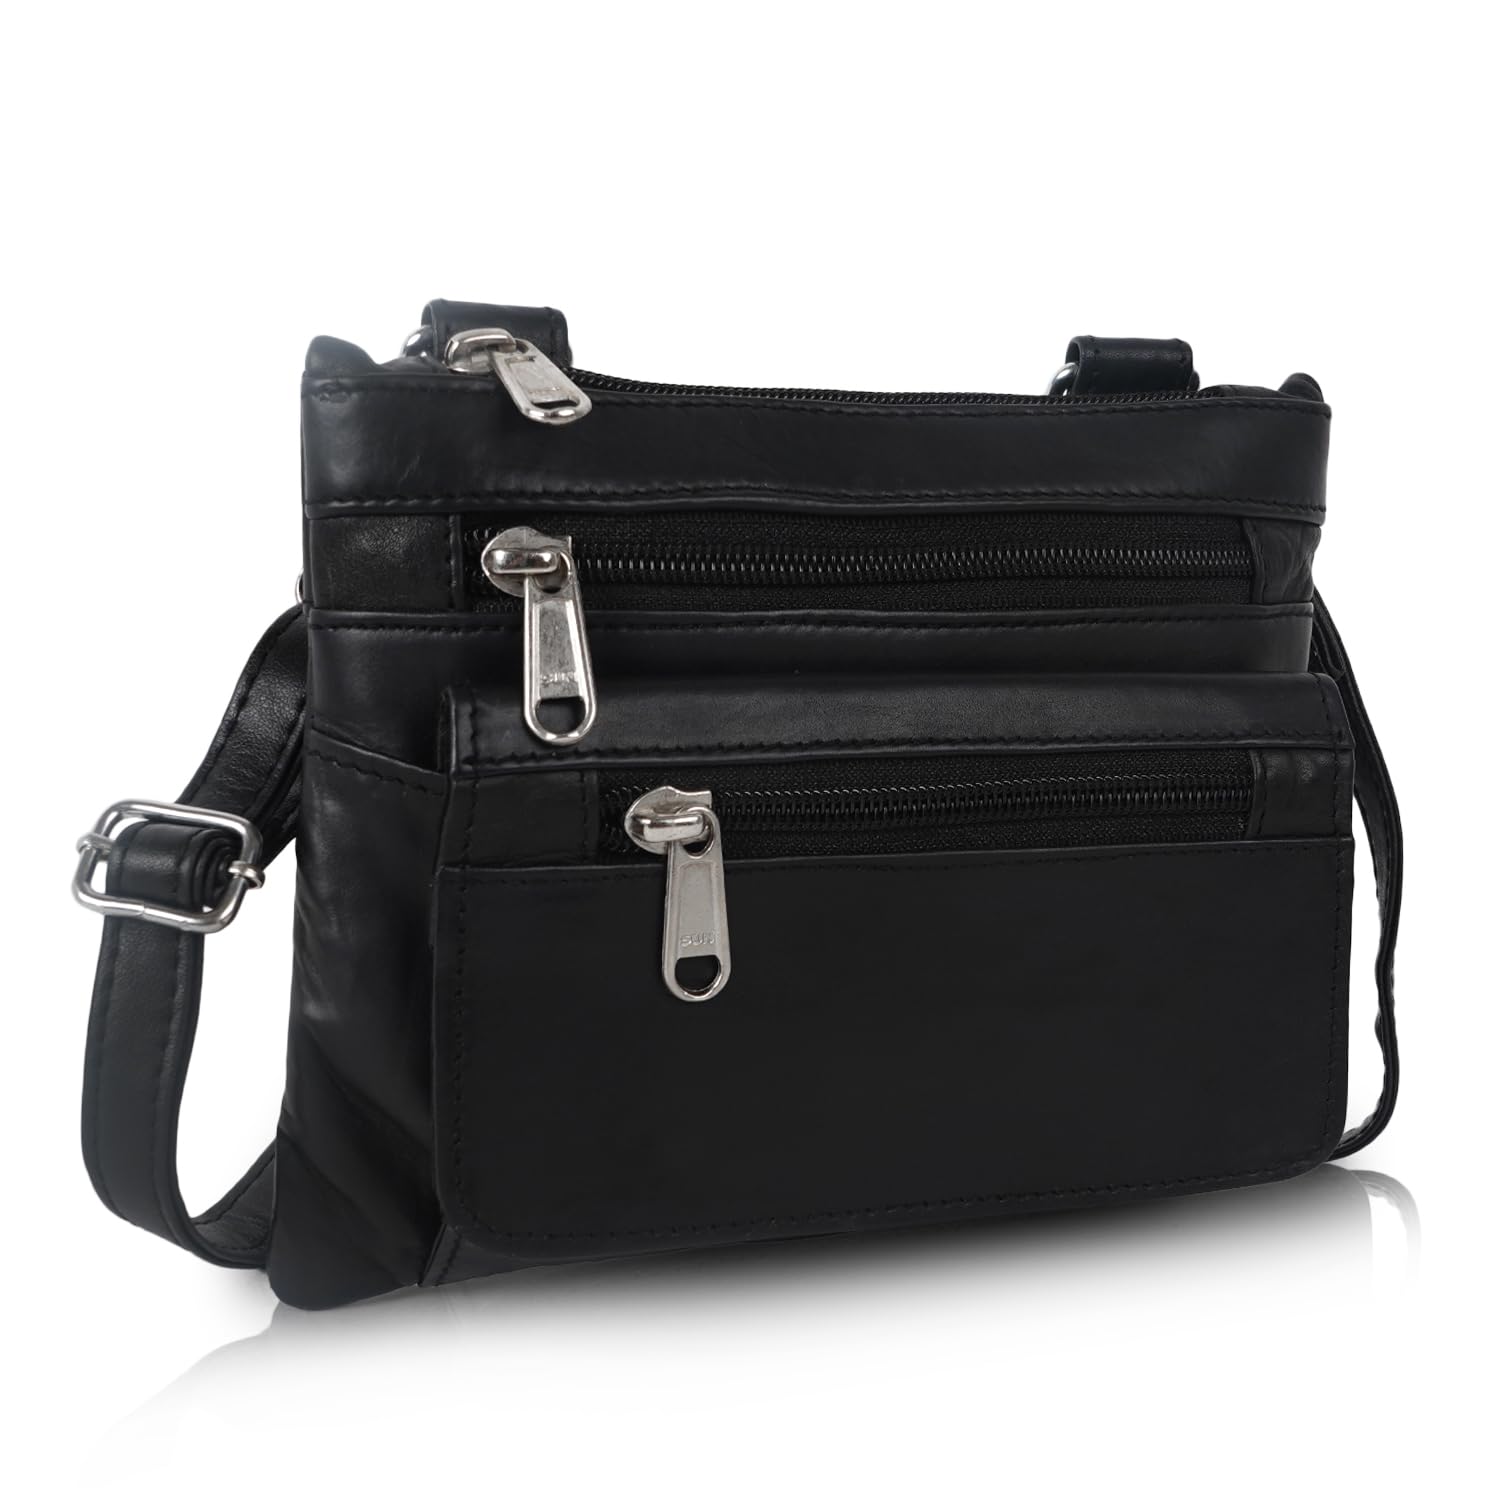 CIMONI® Premium Genuine Leather Sling Bag Stylish & Unique Design Daytrip Trendy Travel Bag Crossbody Purse Bag For Women (Color - Black)